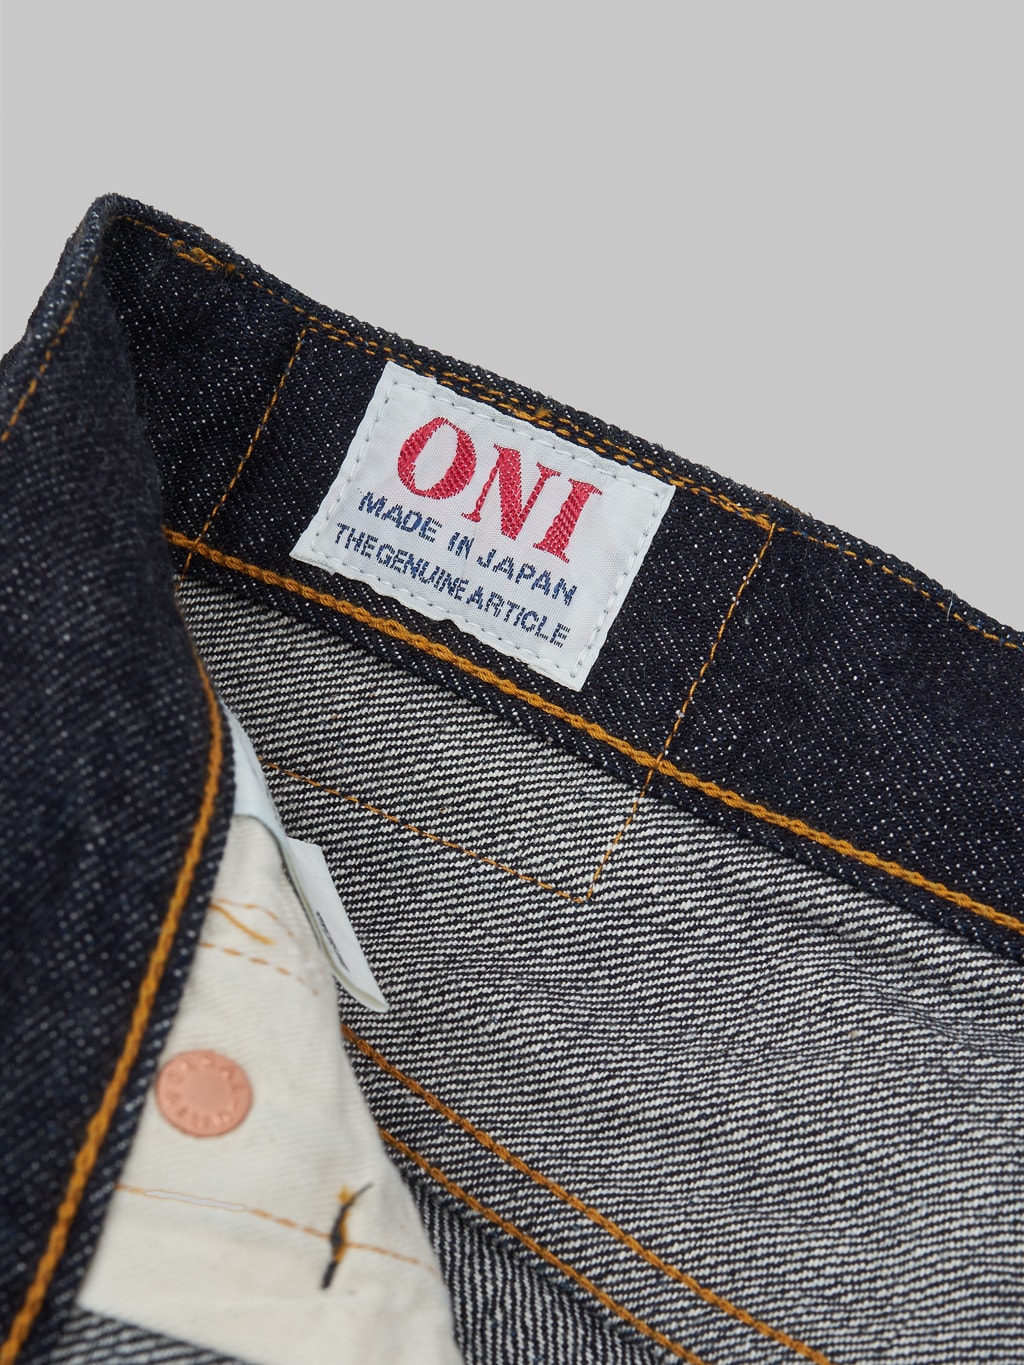 ONI Denim 222 Low Tension Super Wide Straight Jeans interior tag